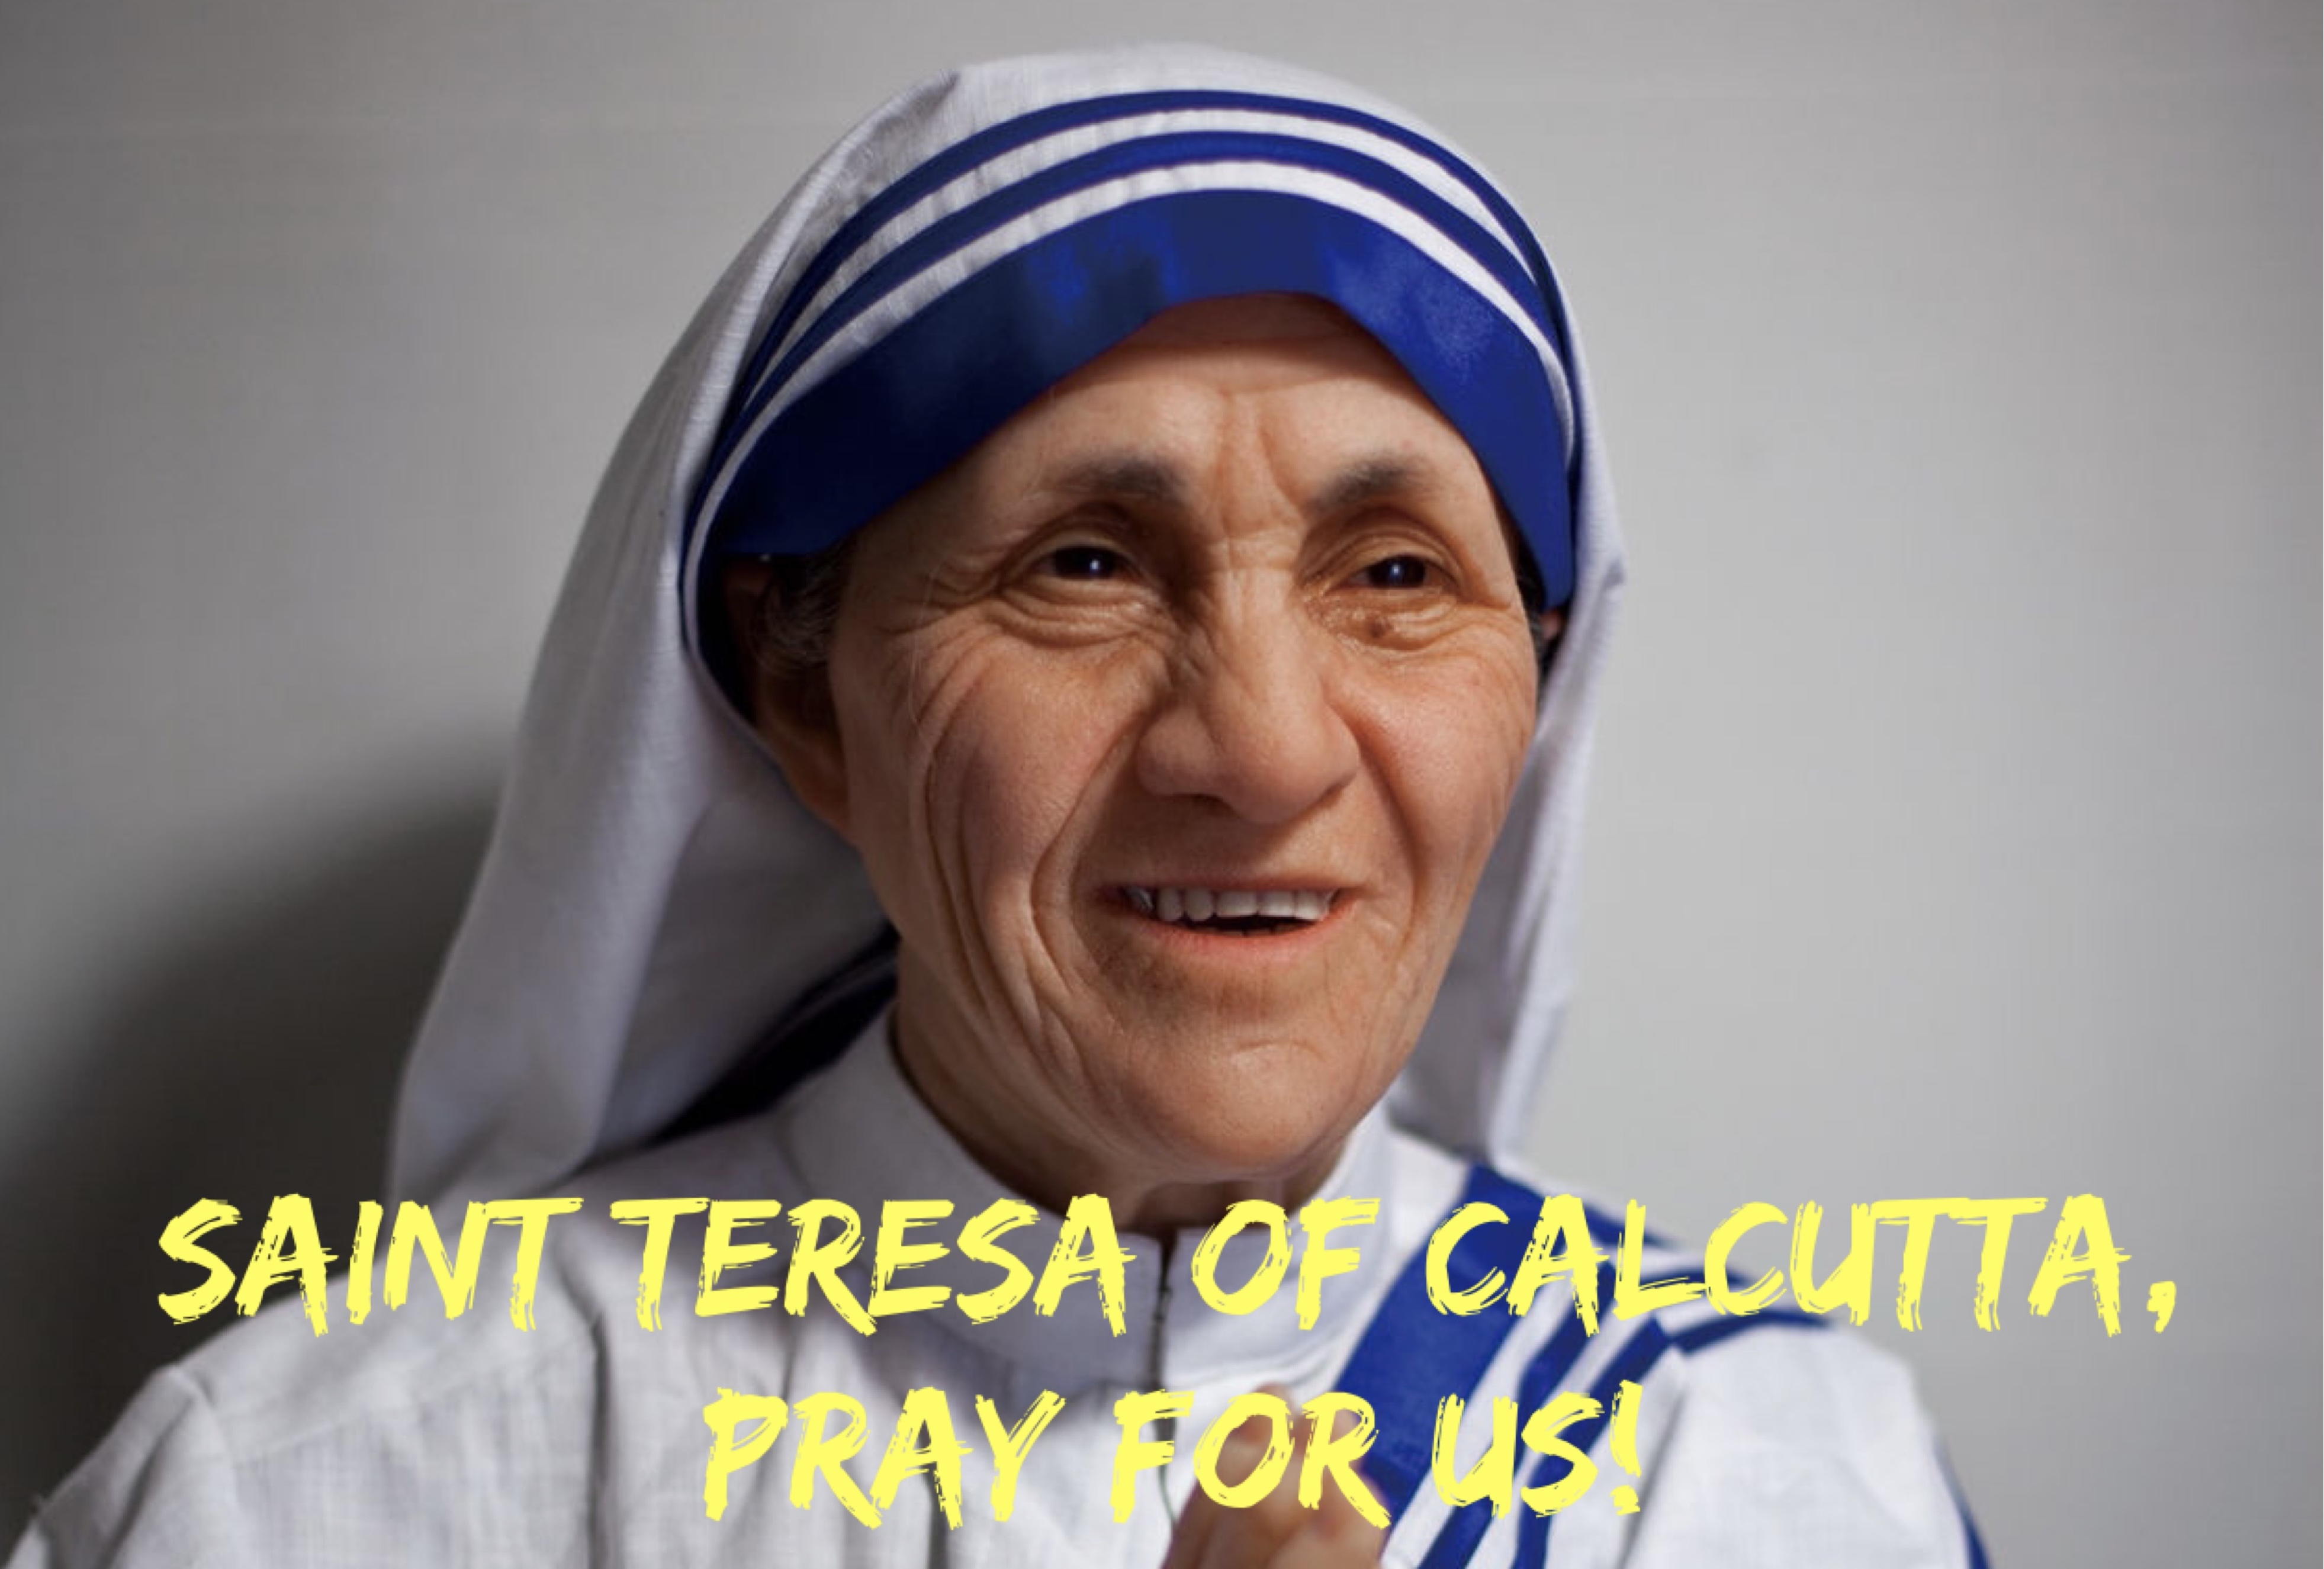 5th September - Saint Teresa of Calcutta